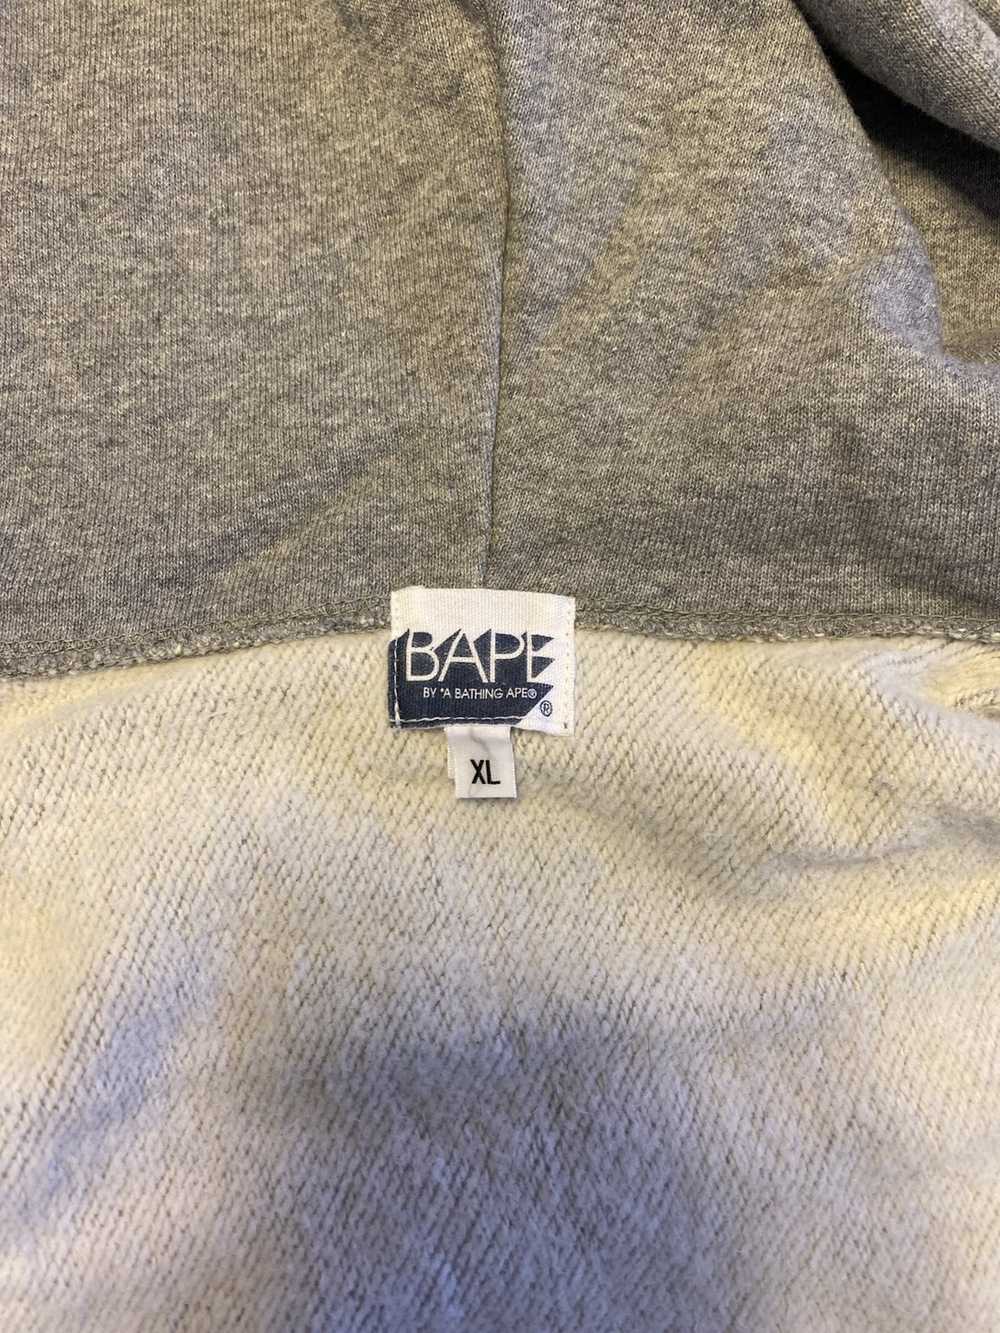 Bape × Kaws Bape x Kaws full zip up hoodie - image 9